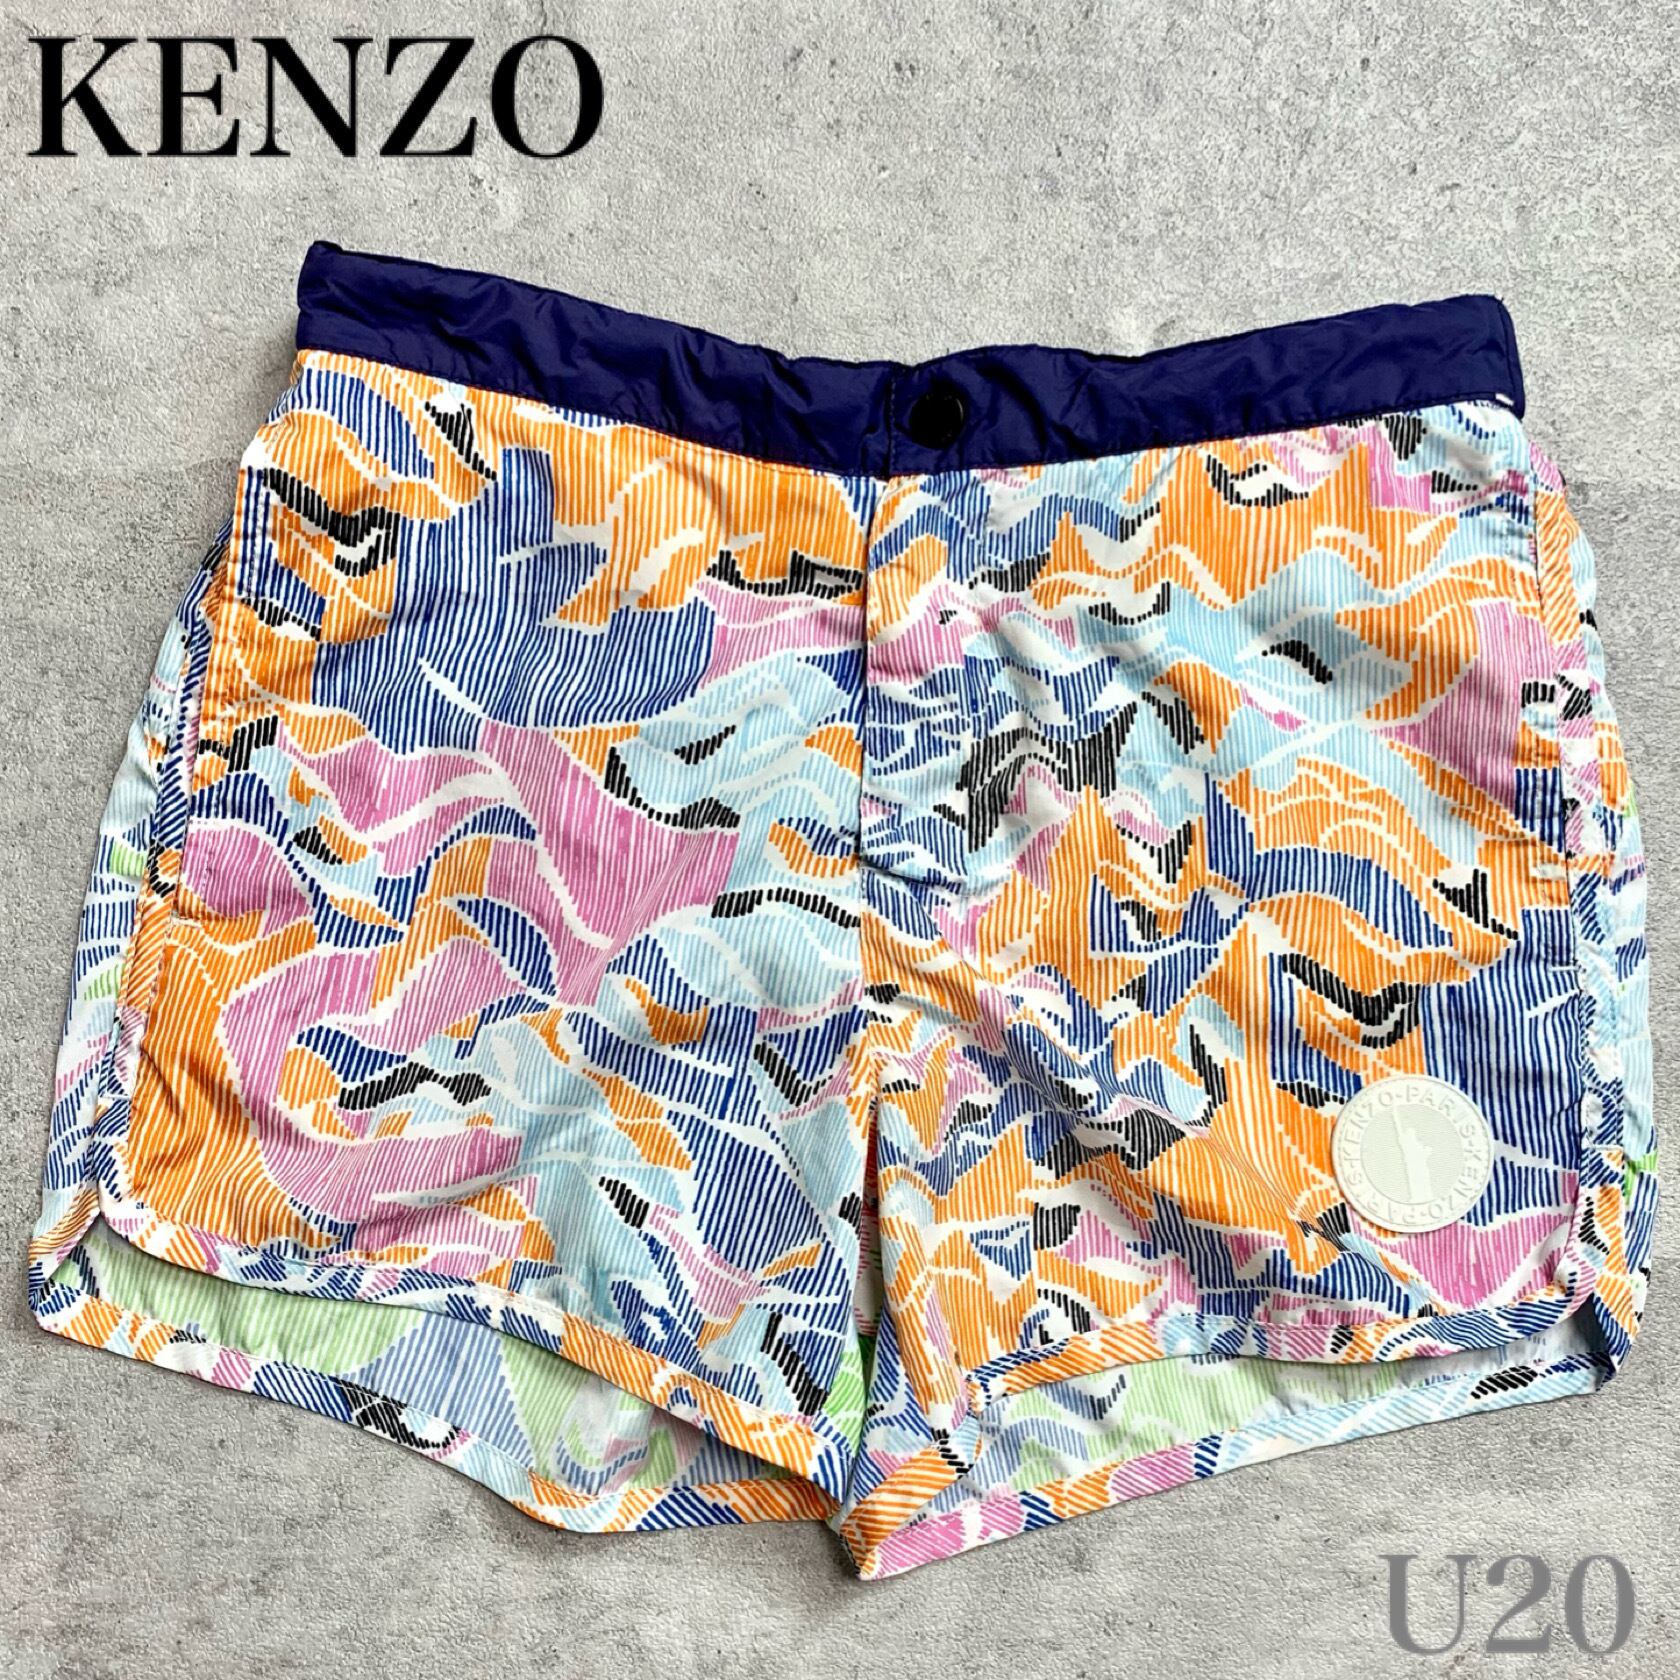 KENZO ケンゾー スイムパンツ ショートパンツ ショーツ 水着 XS ■ U20 【USED】 | etc powered by BASE